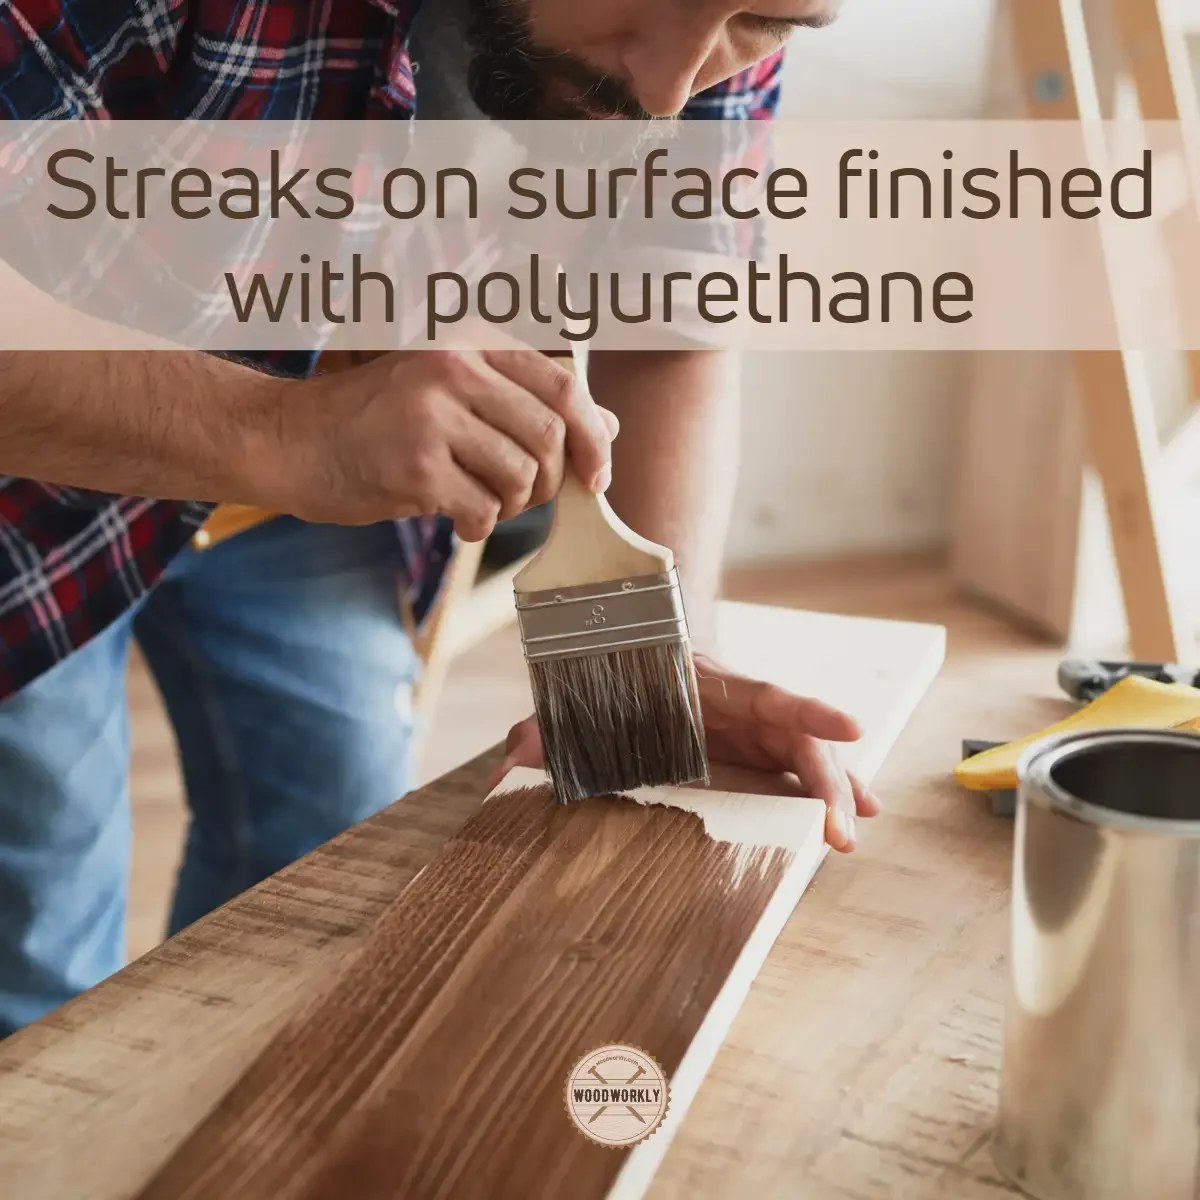 Streaks on surface finished with polyurethane